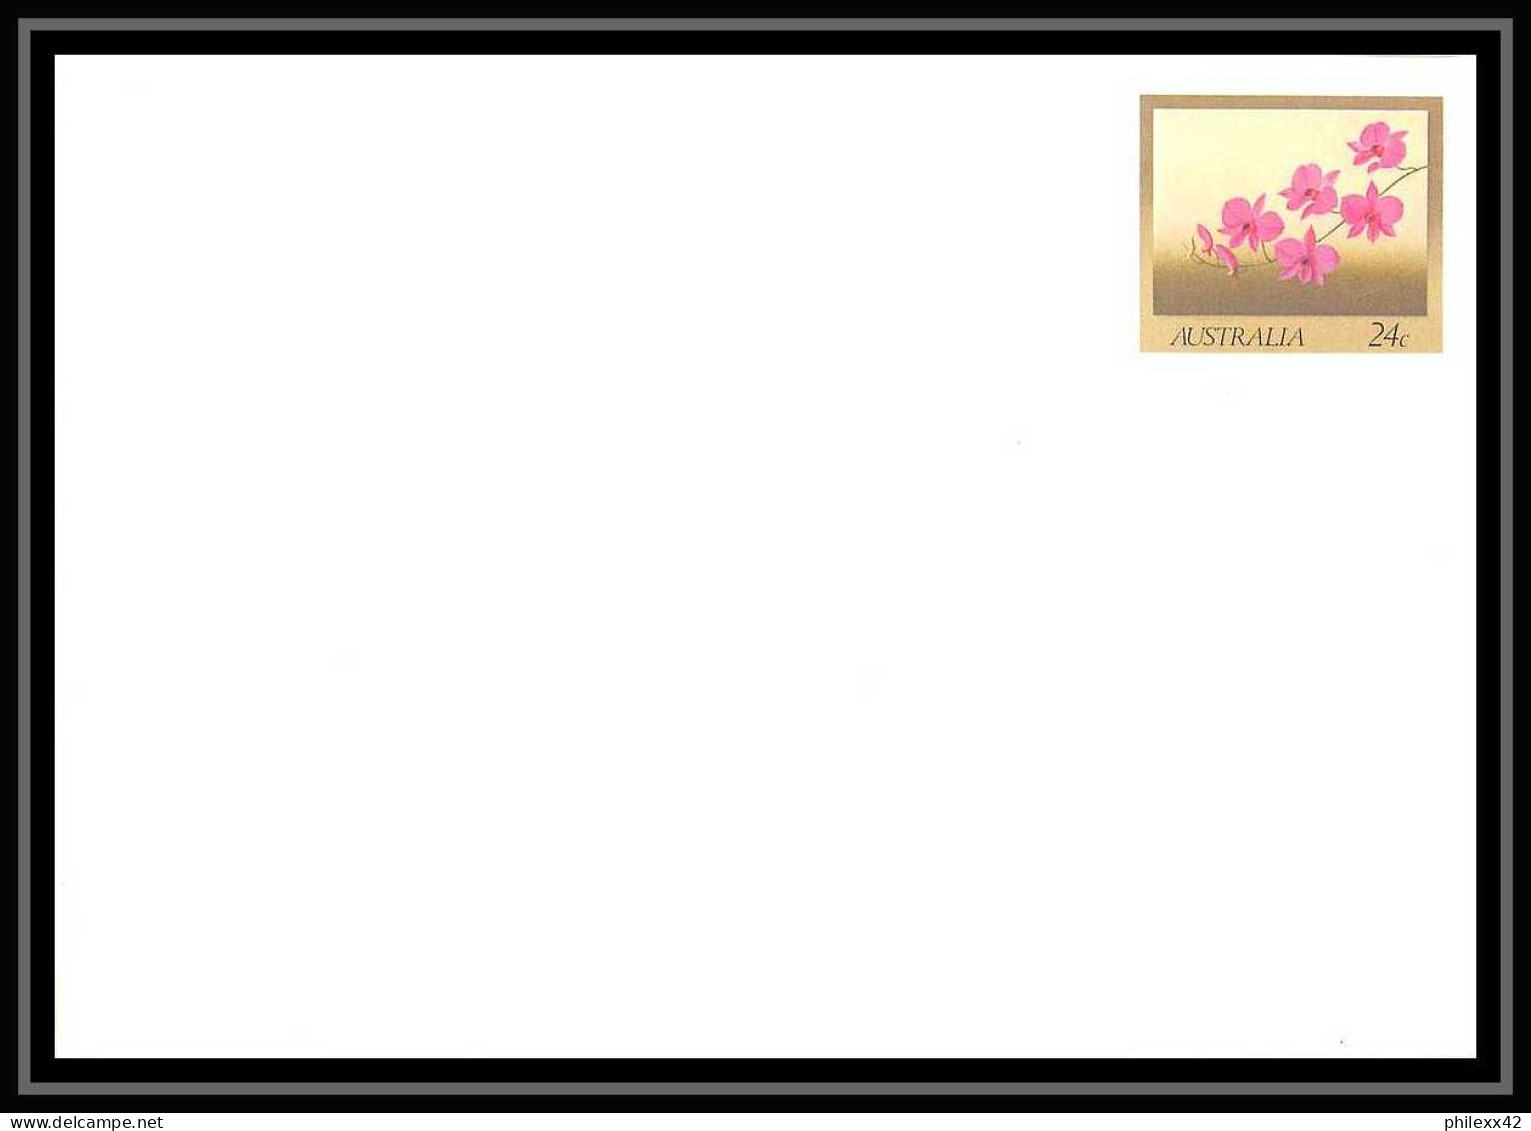 4496 24c Enveloppe Australie (australia) Neuf Tb Fleurs (plants - Flowers) Entier Postal Stationery - Postal Stationery